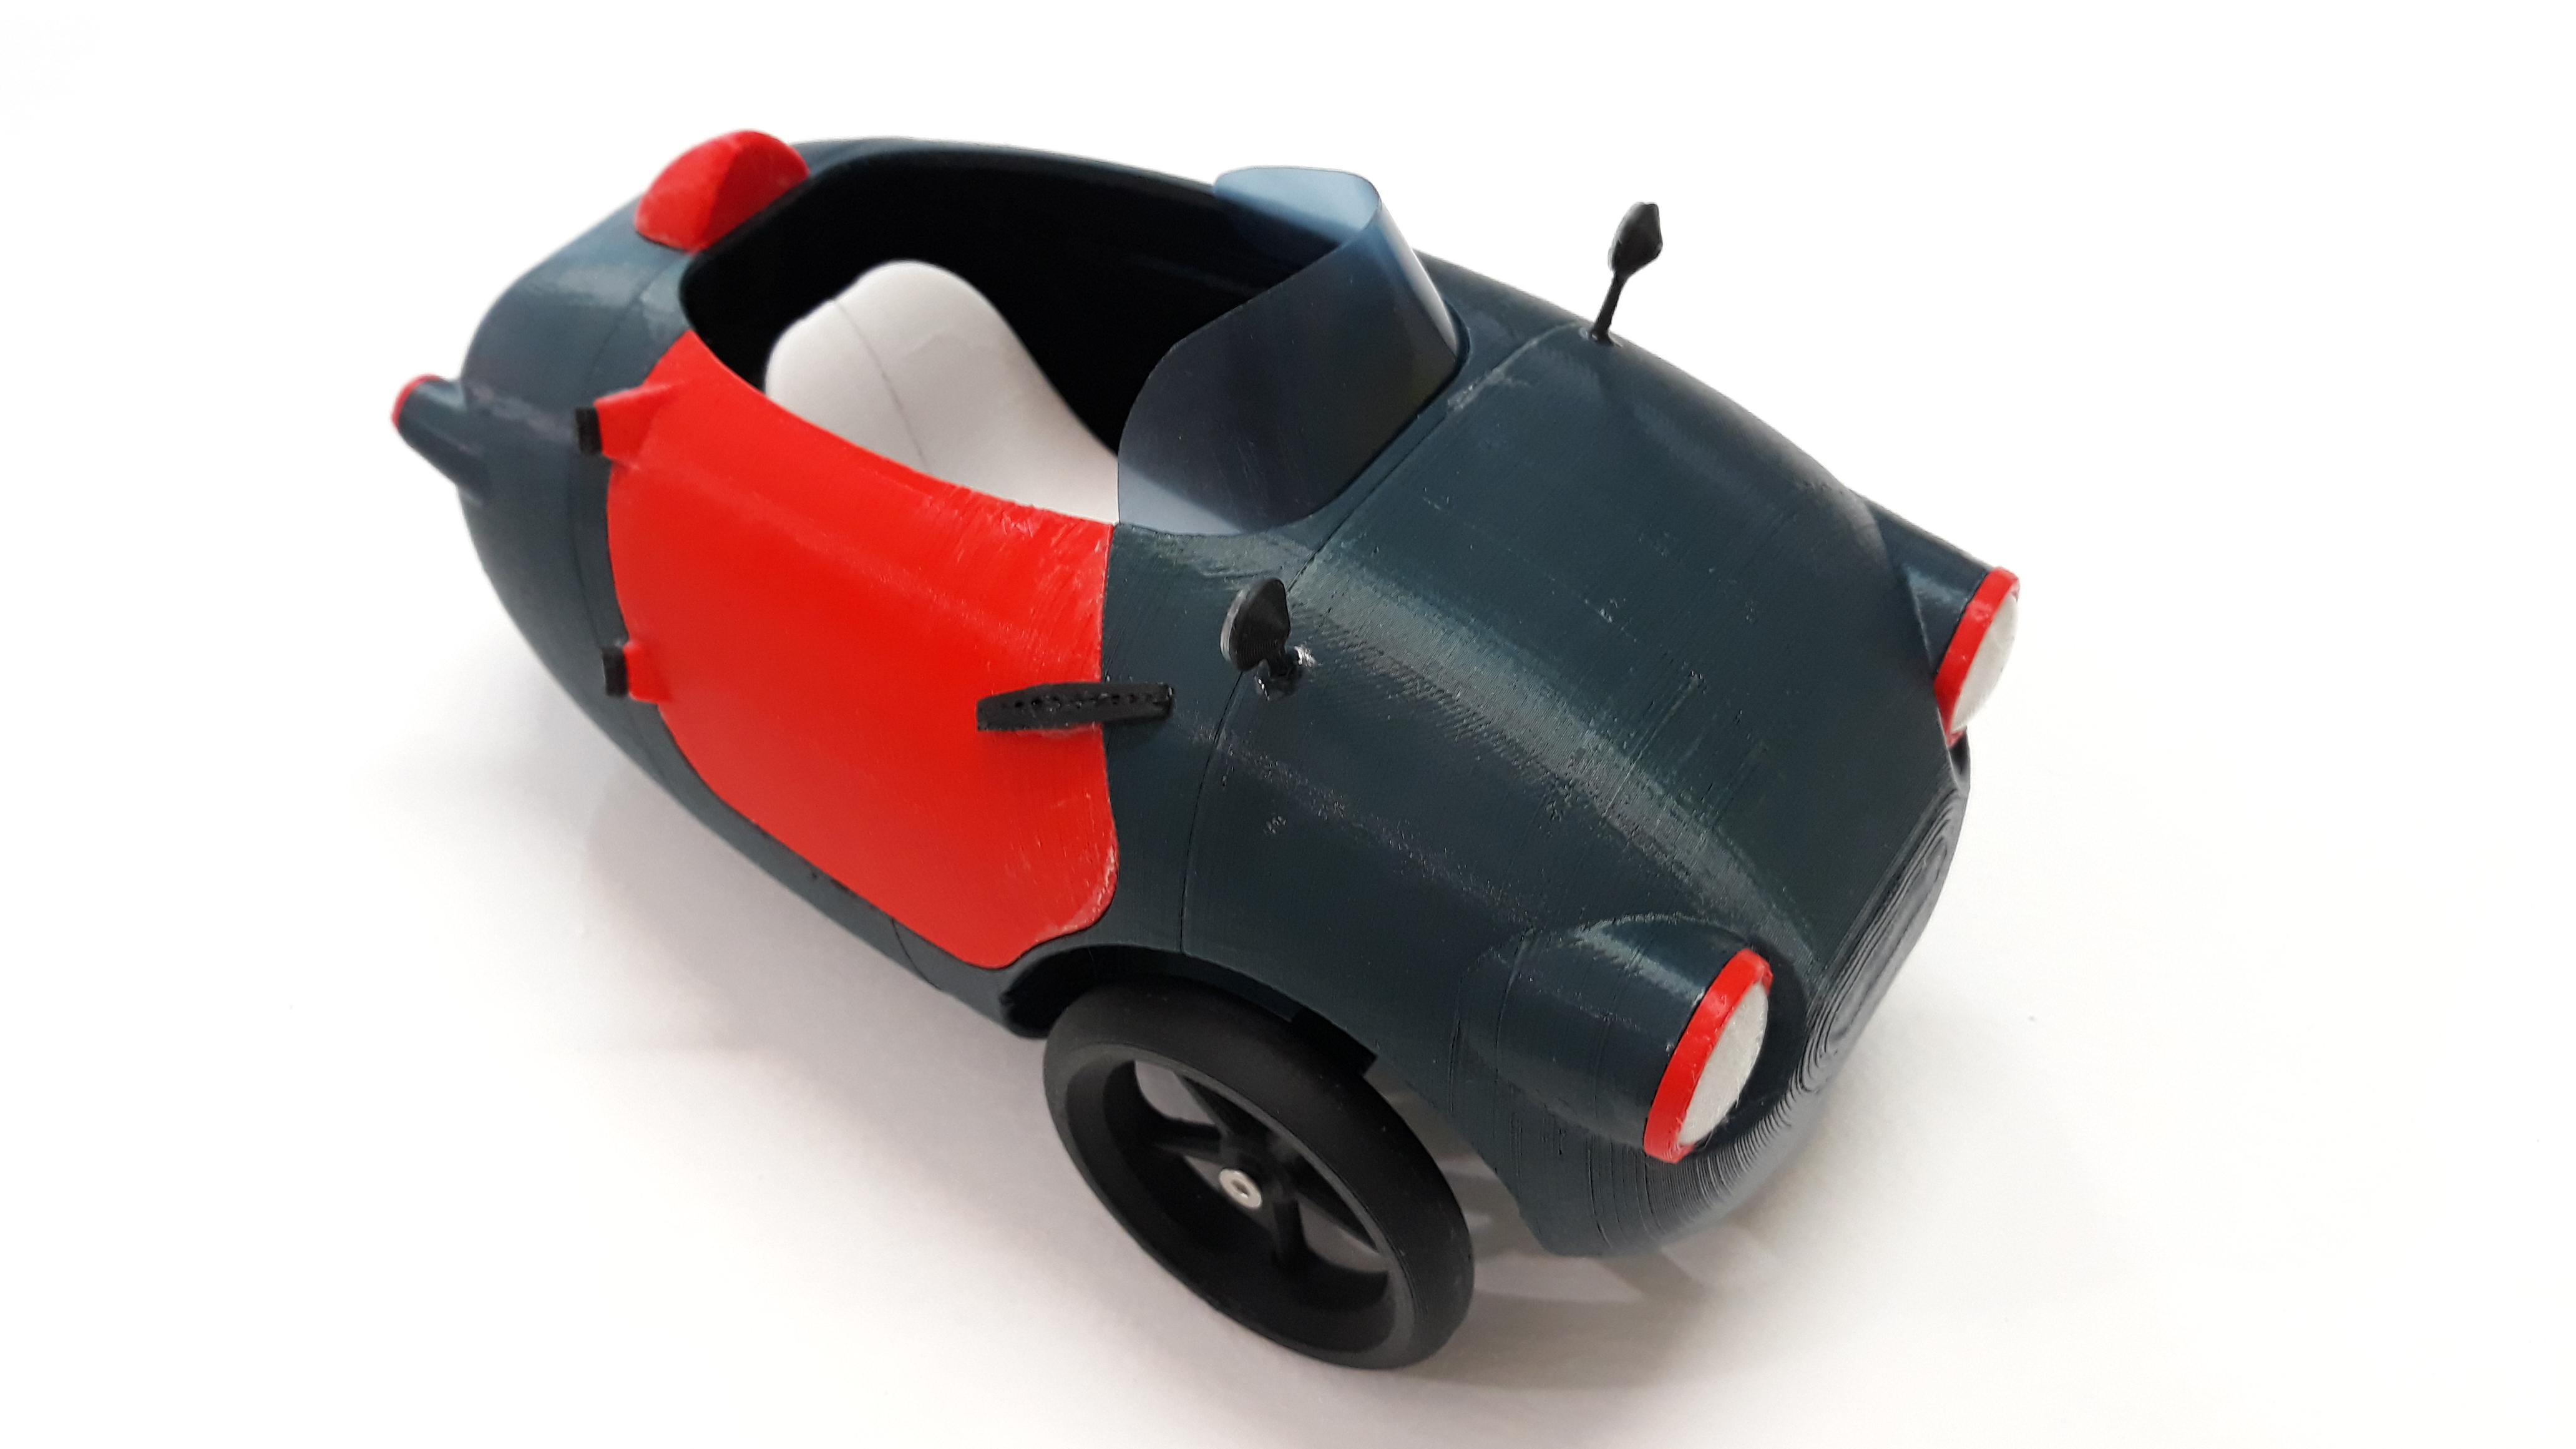 3D PRINTED DIY ELECTRIC CAR, The Jellybean3D 1/10 scale model